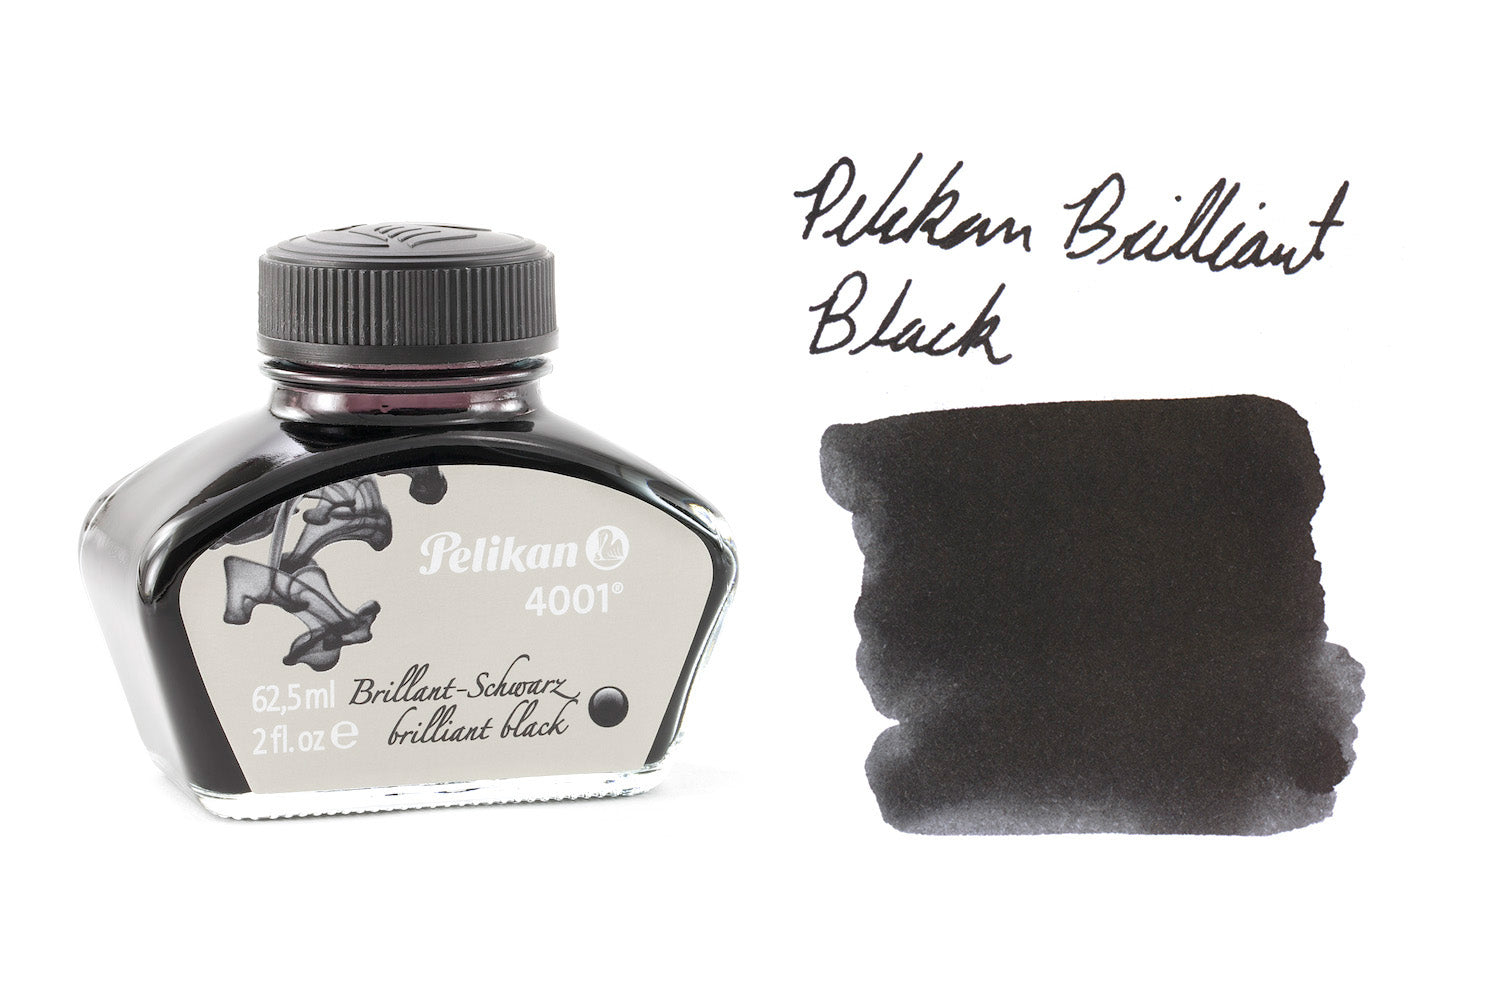 Pelikan 4001 Brilliant Black fountain pen ink bottle and swab